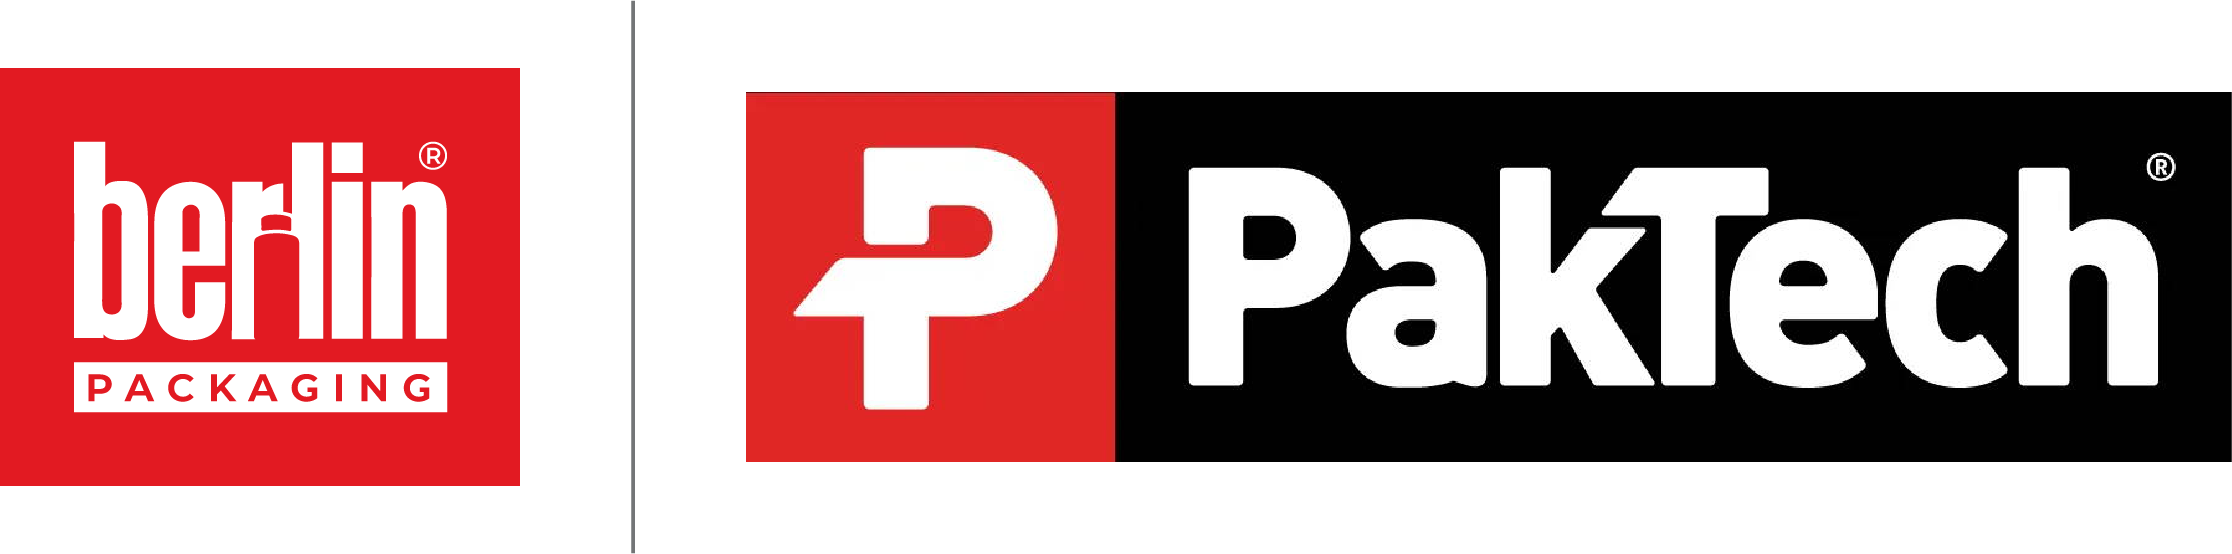 Berlin Packaging and PakTech Logos